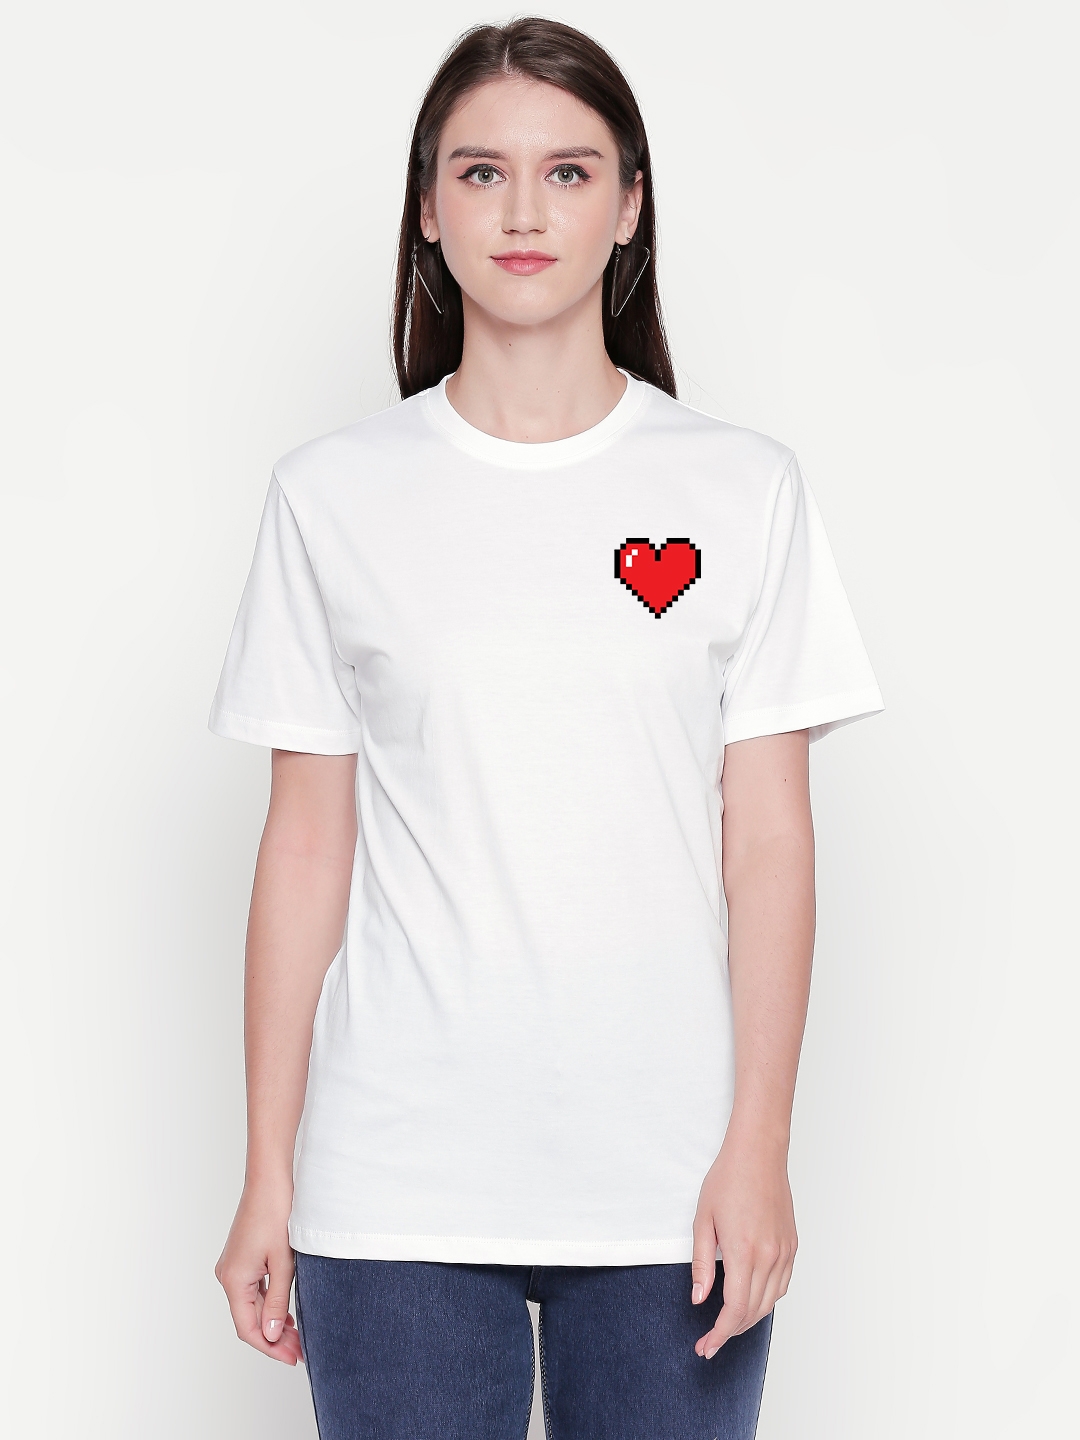 creativeideas.store | Pixel Heart White Tshirt 0